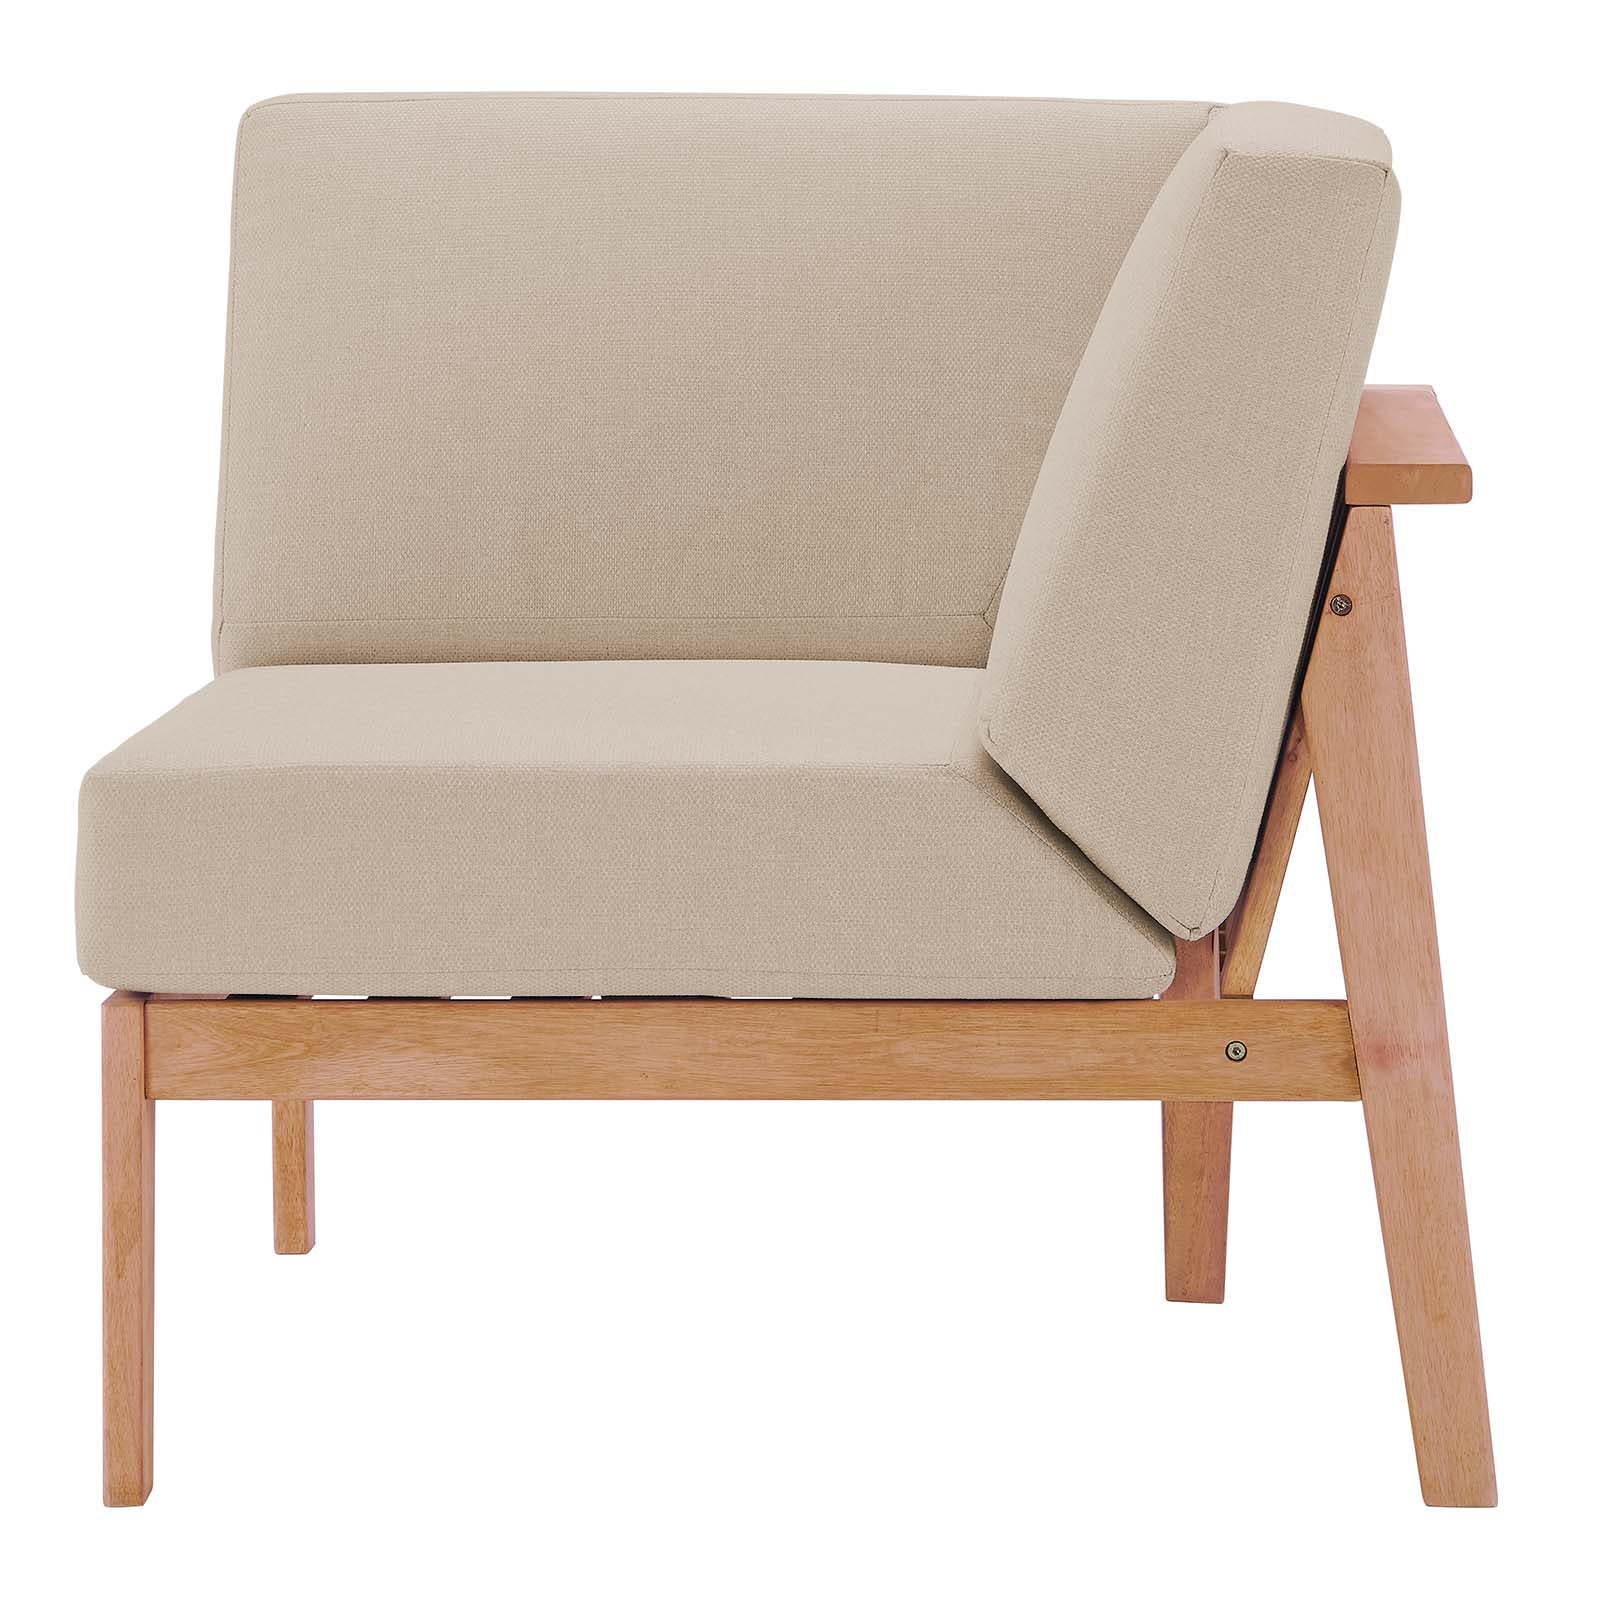 Sedona Outdoor Patio Eucalyptus Wood Sectional Sofa Corner Chair-Outdoor Corner Chair-Modway-Wall2Wall Furnishings